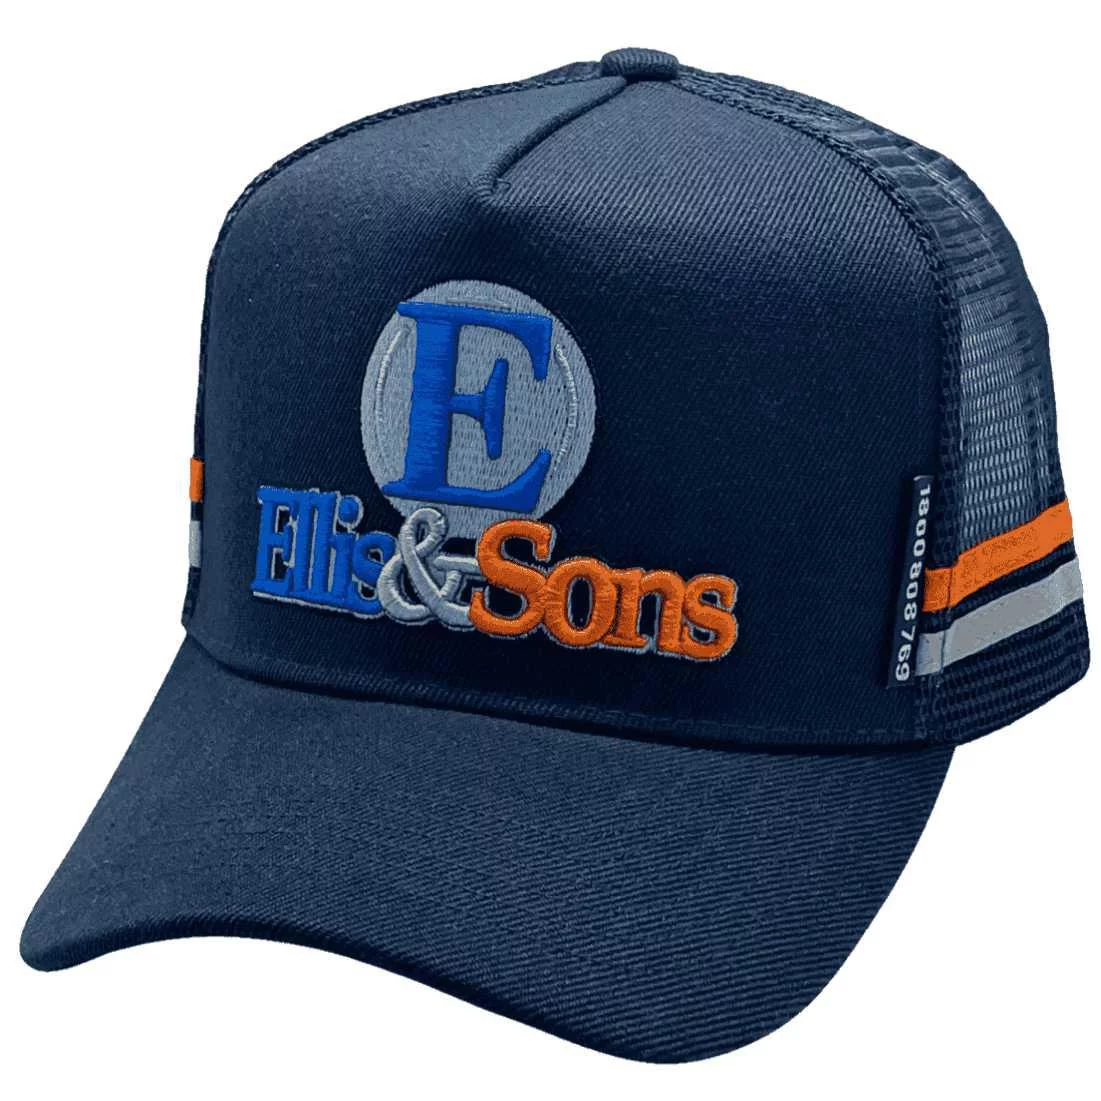 Ellis & Sons Cowra NSW HP Midrange Aussie Trucker Hats with Australian Head Fit Crown and 2 Side Bands Navy Orange Grey